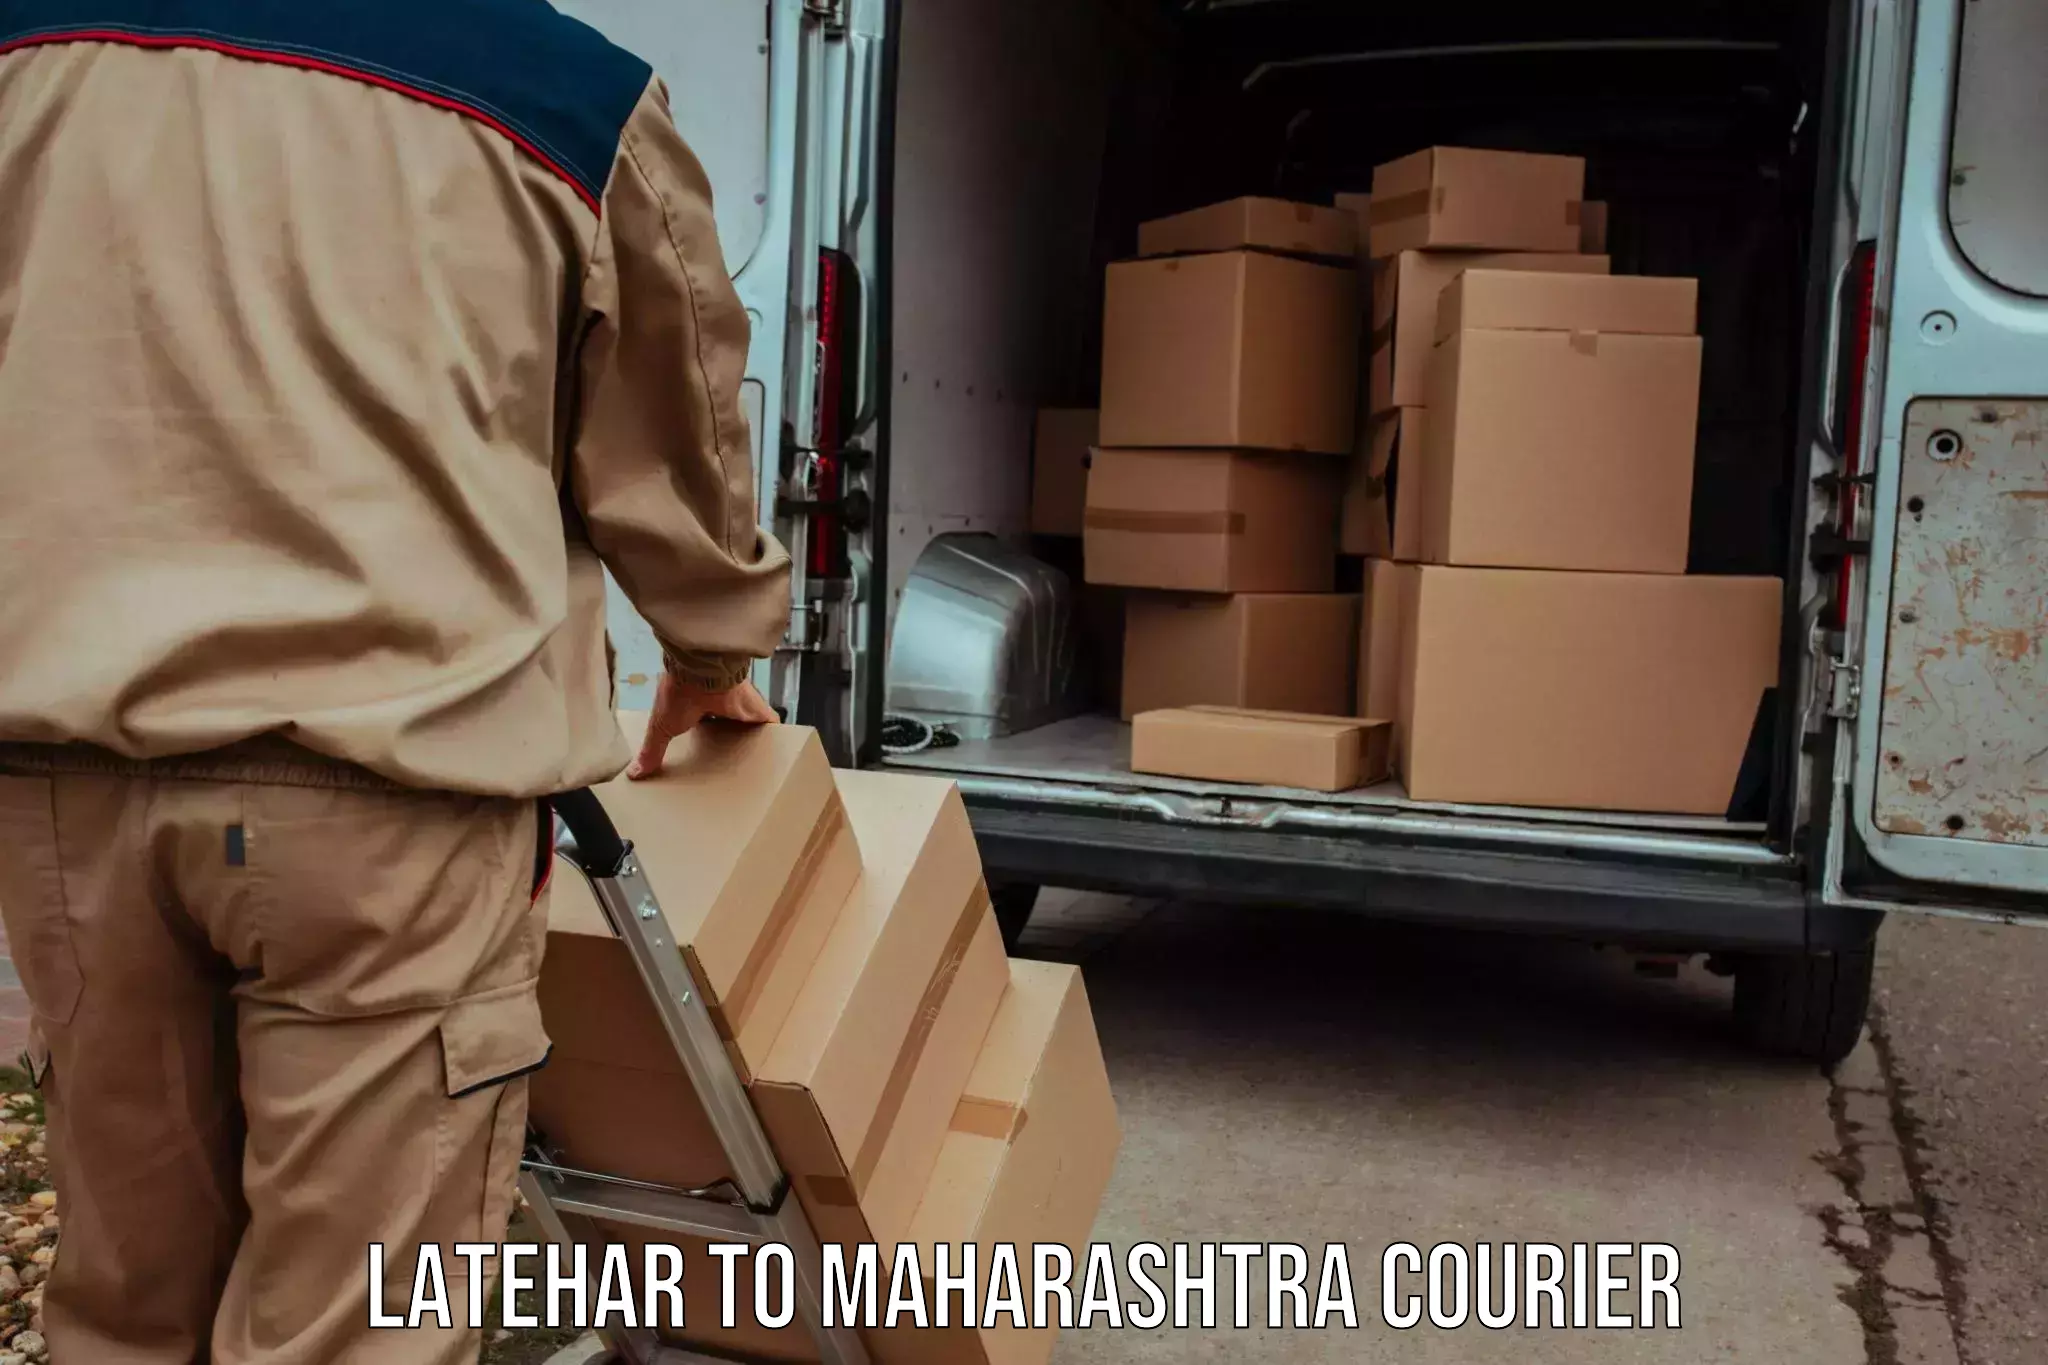 State-of-the-art courier technology Latehar to Maharashtra